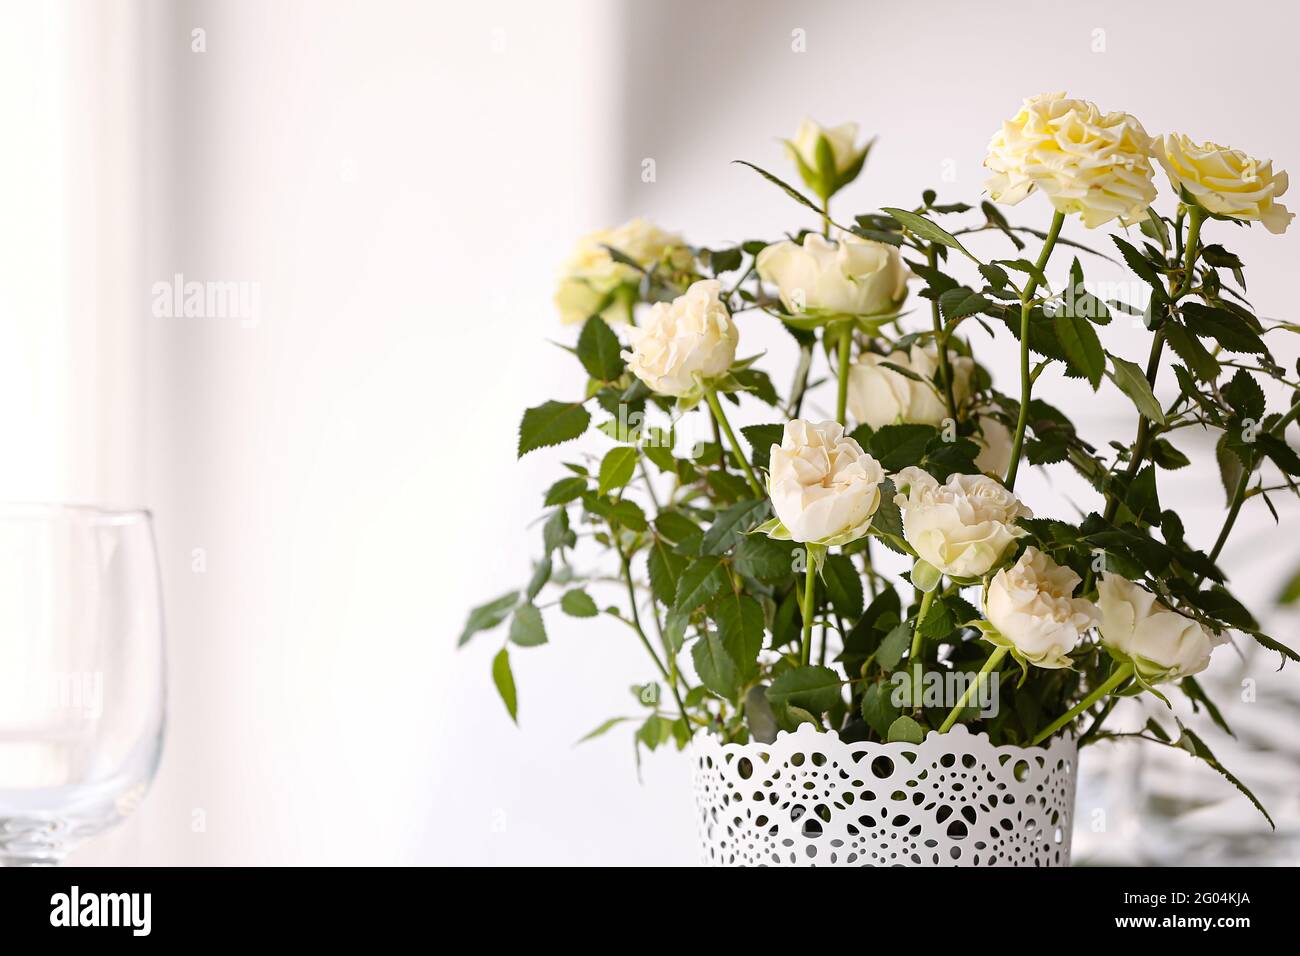 Schöne weiße Rosen im Topf, Nahaufnahme Stockfotografie - Alamy